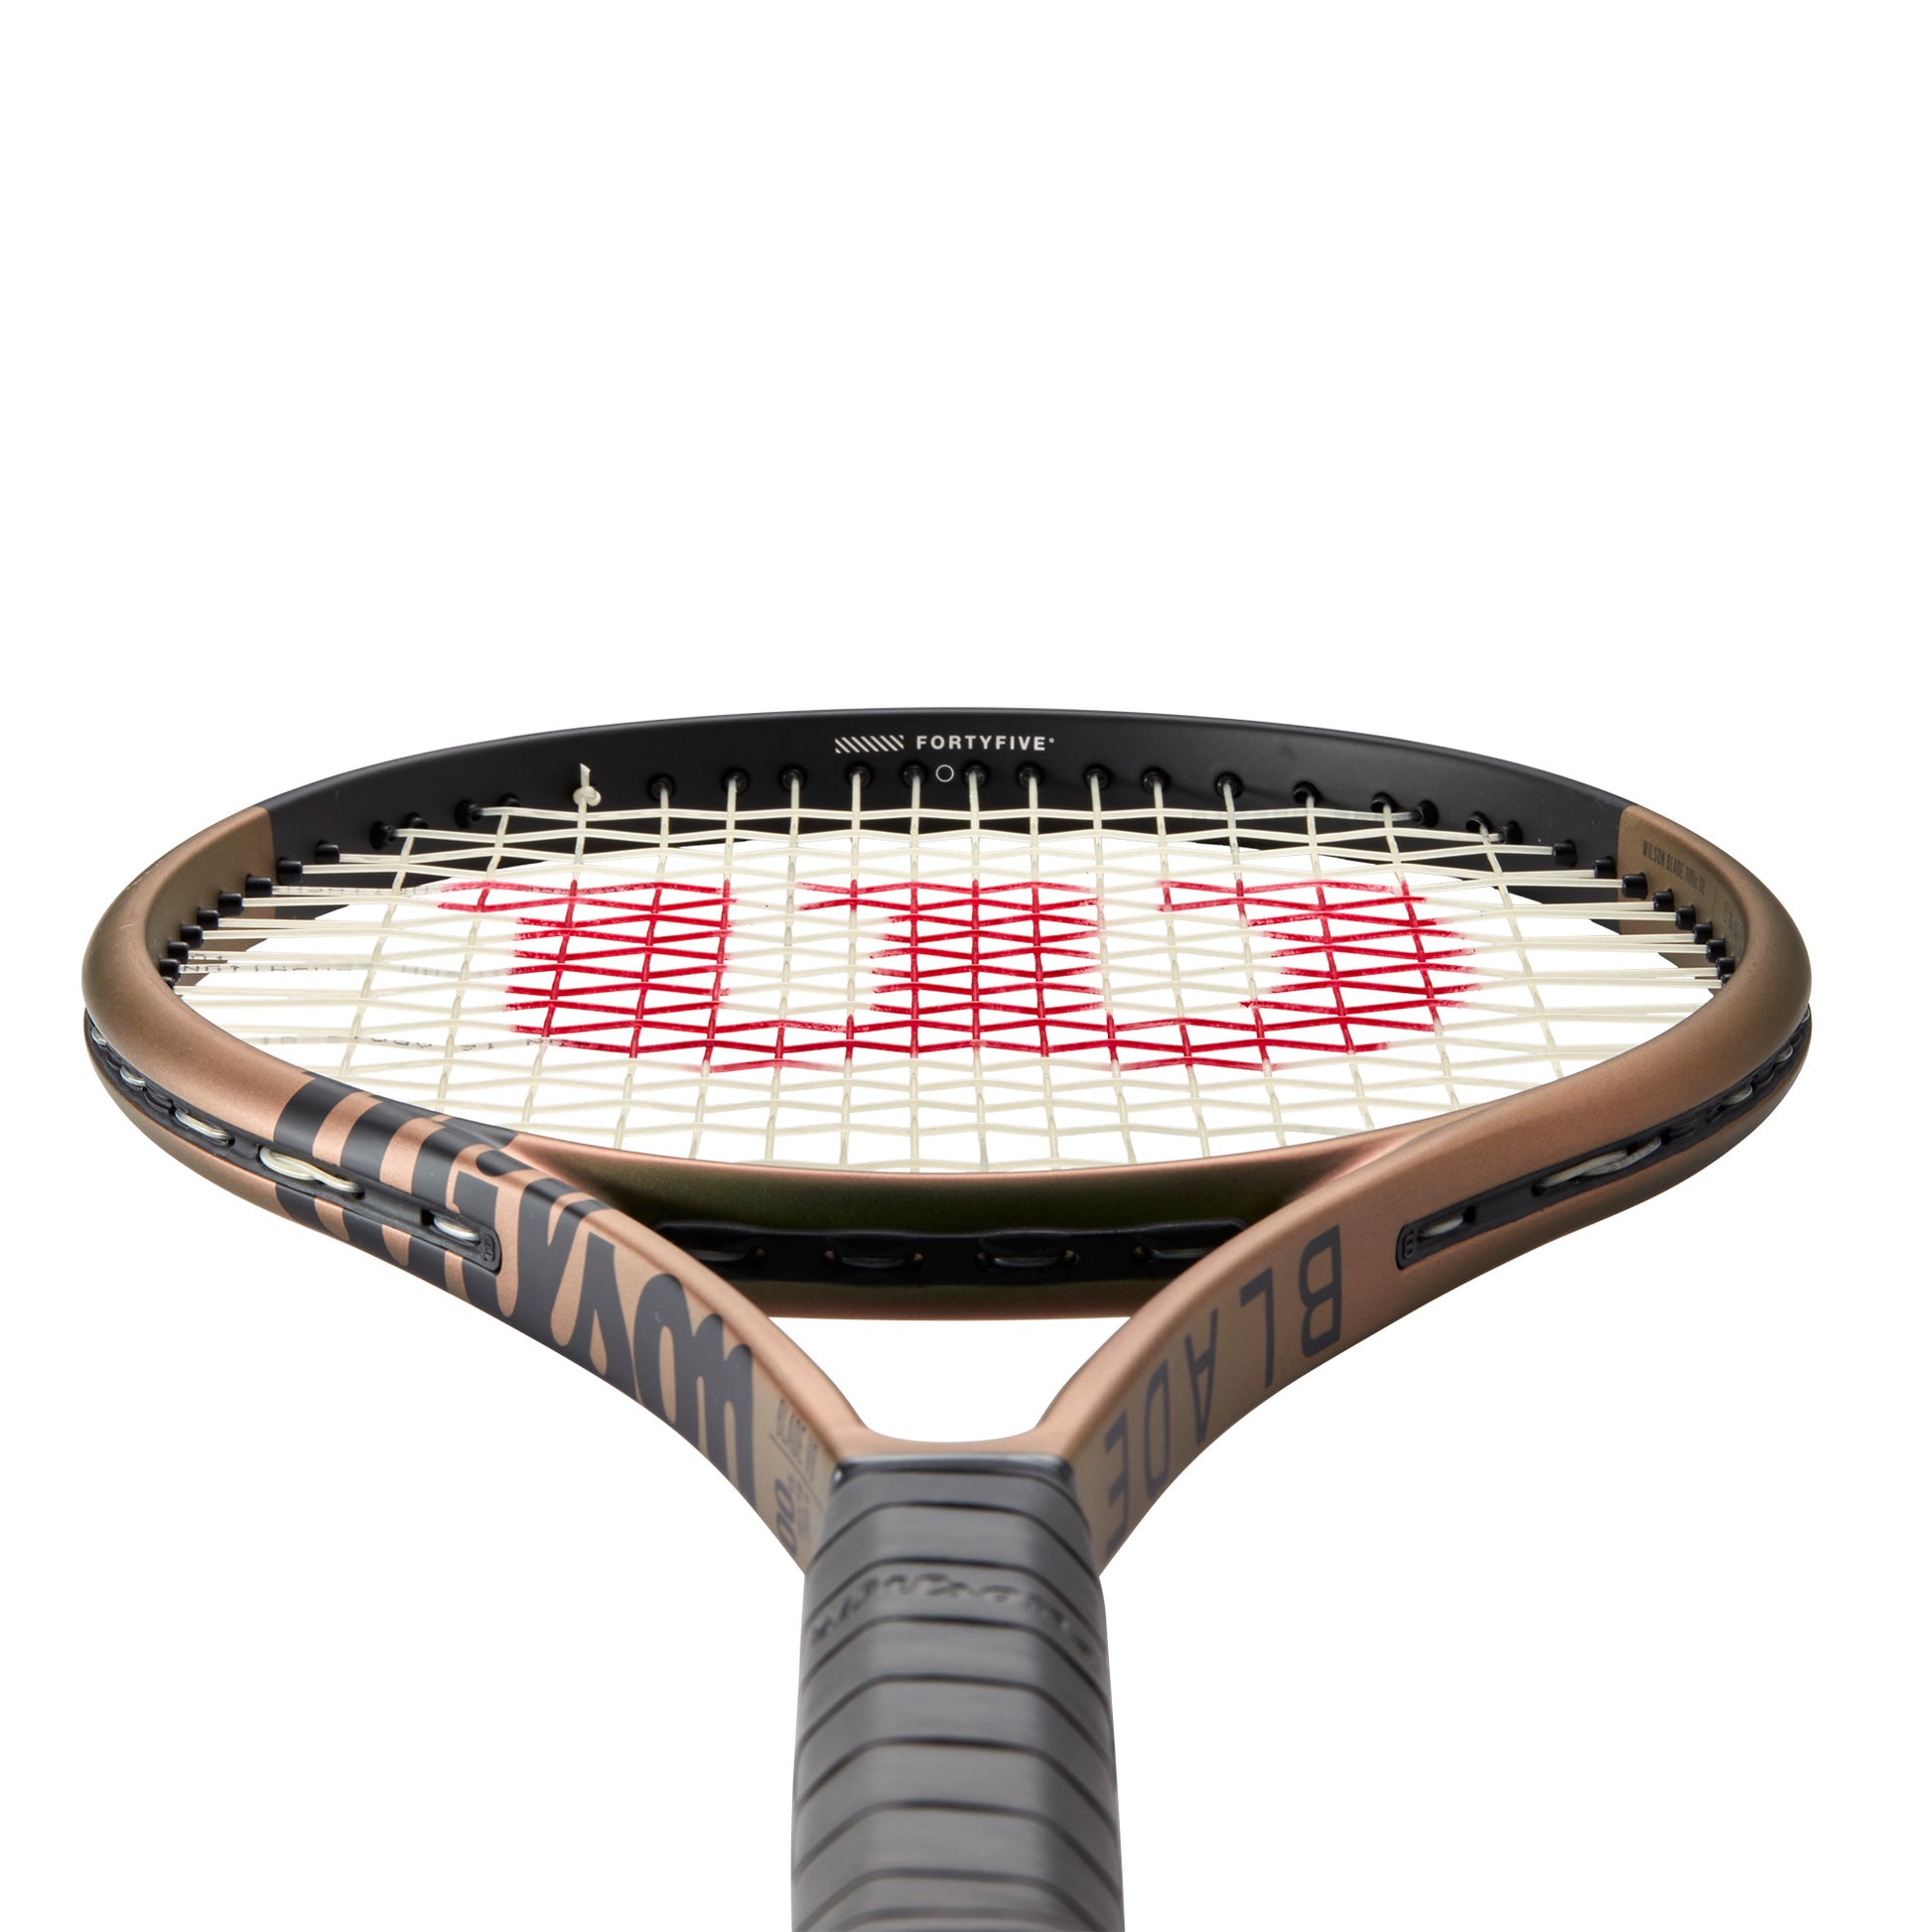 Wilson Blade 100Ul v8 Tennis Racket